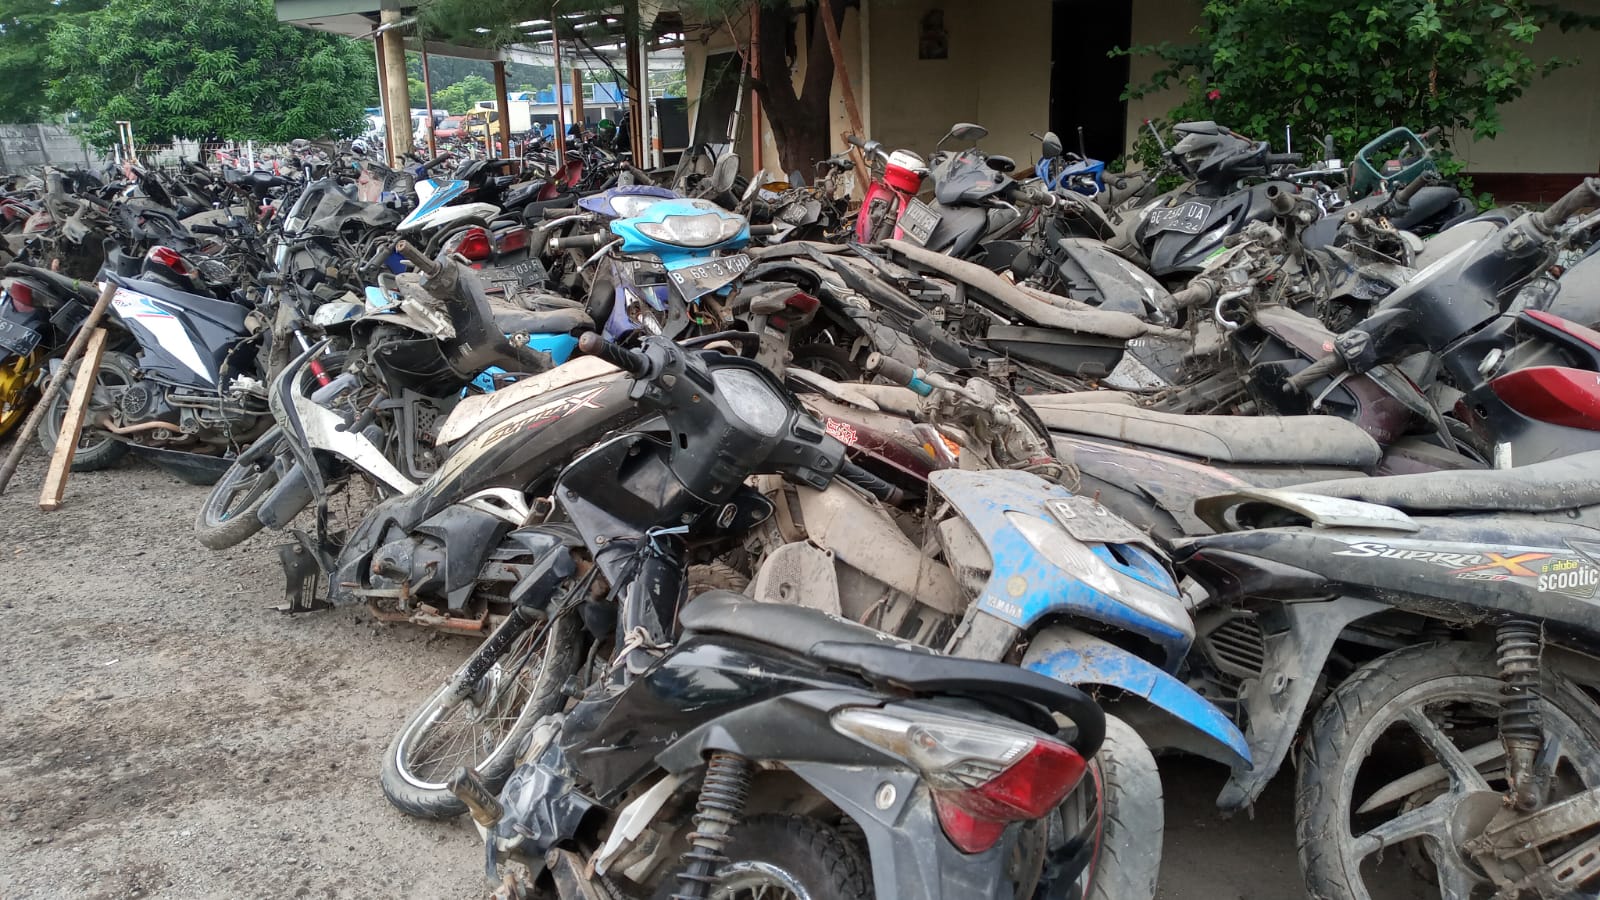 Penampakan Ratusan Motor Bekas Kecelakaan di Polres Metro Bekasi, Tak Ada yang Mau Ambil